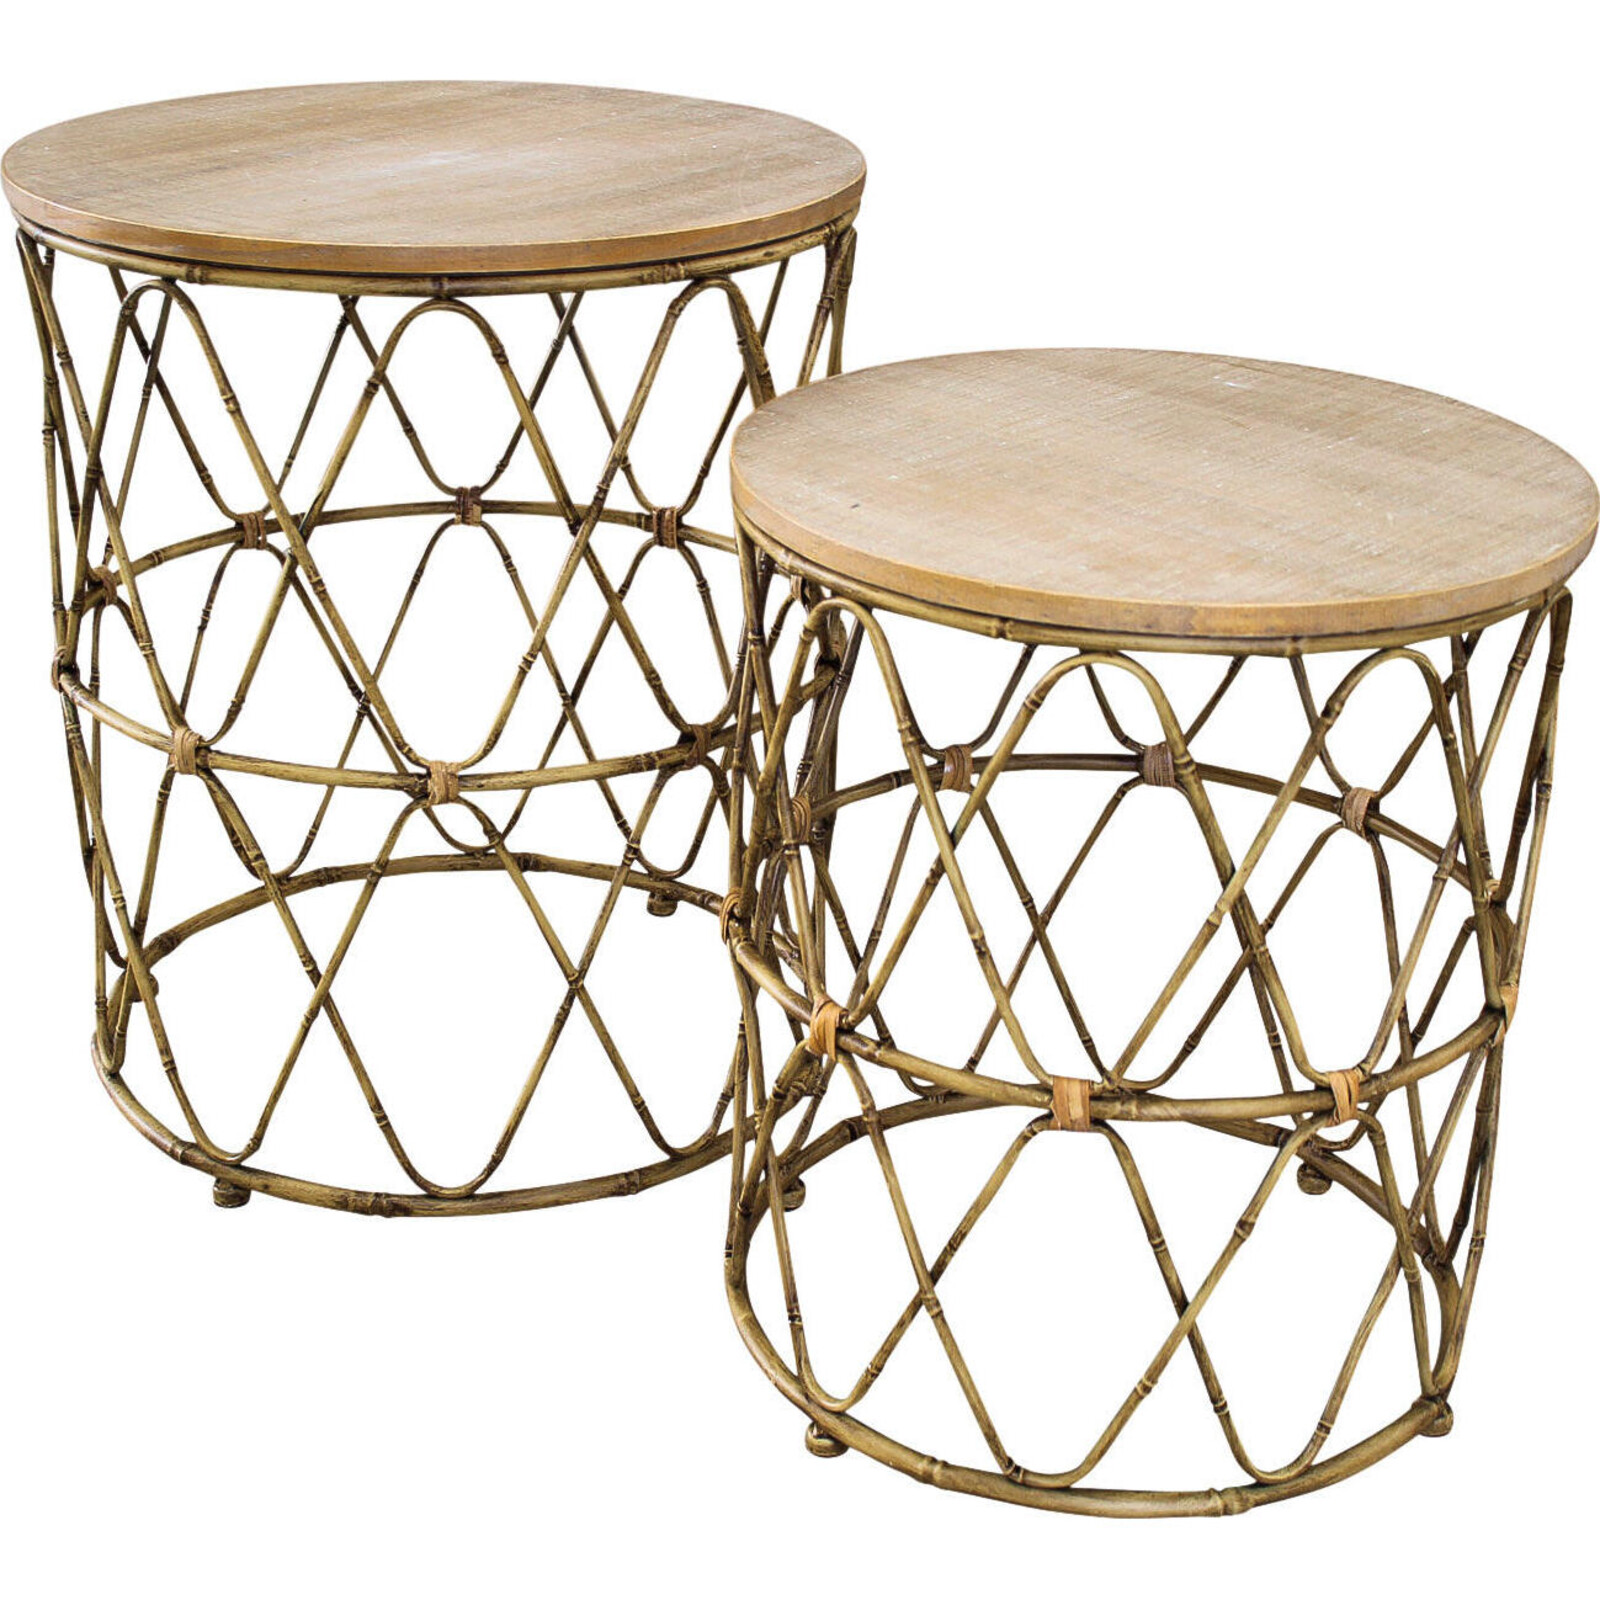 Metal Cane Drum Tables S/2